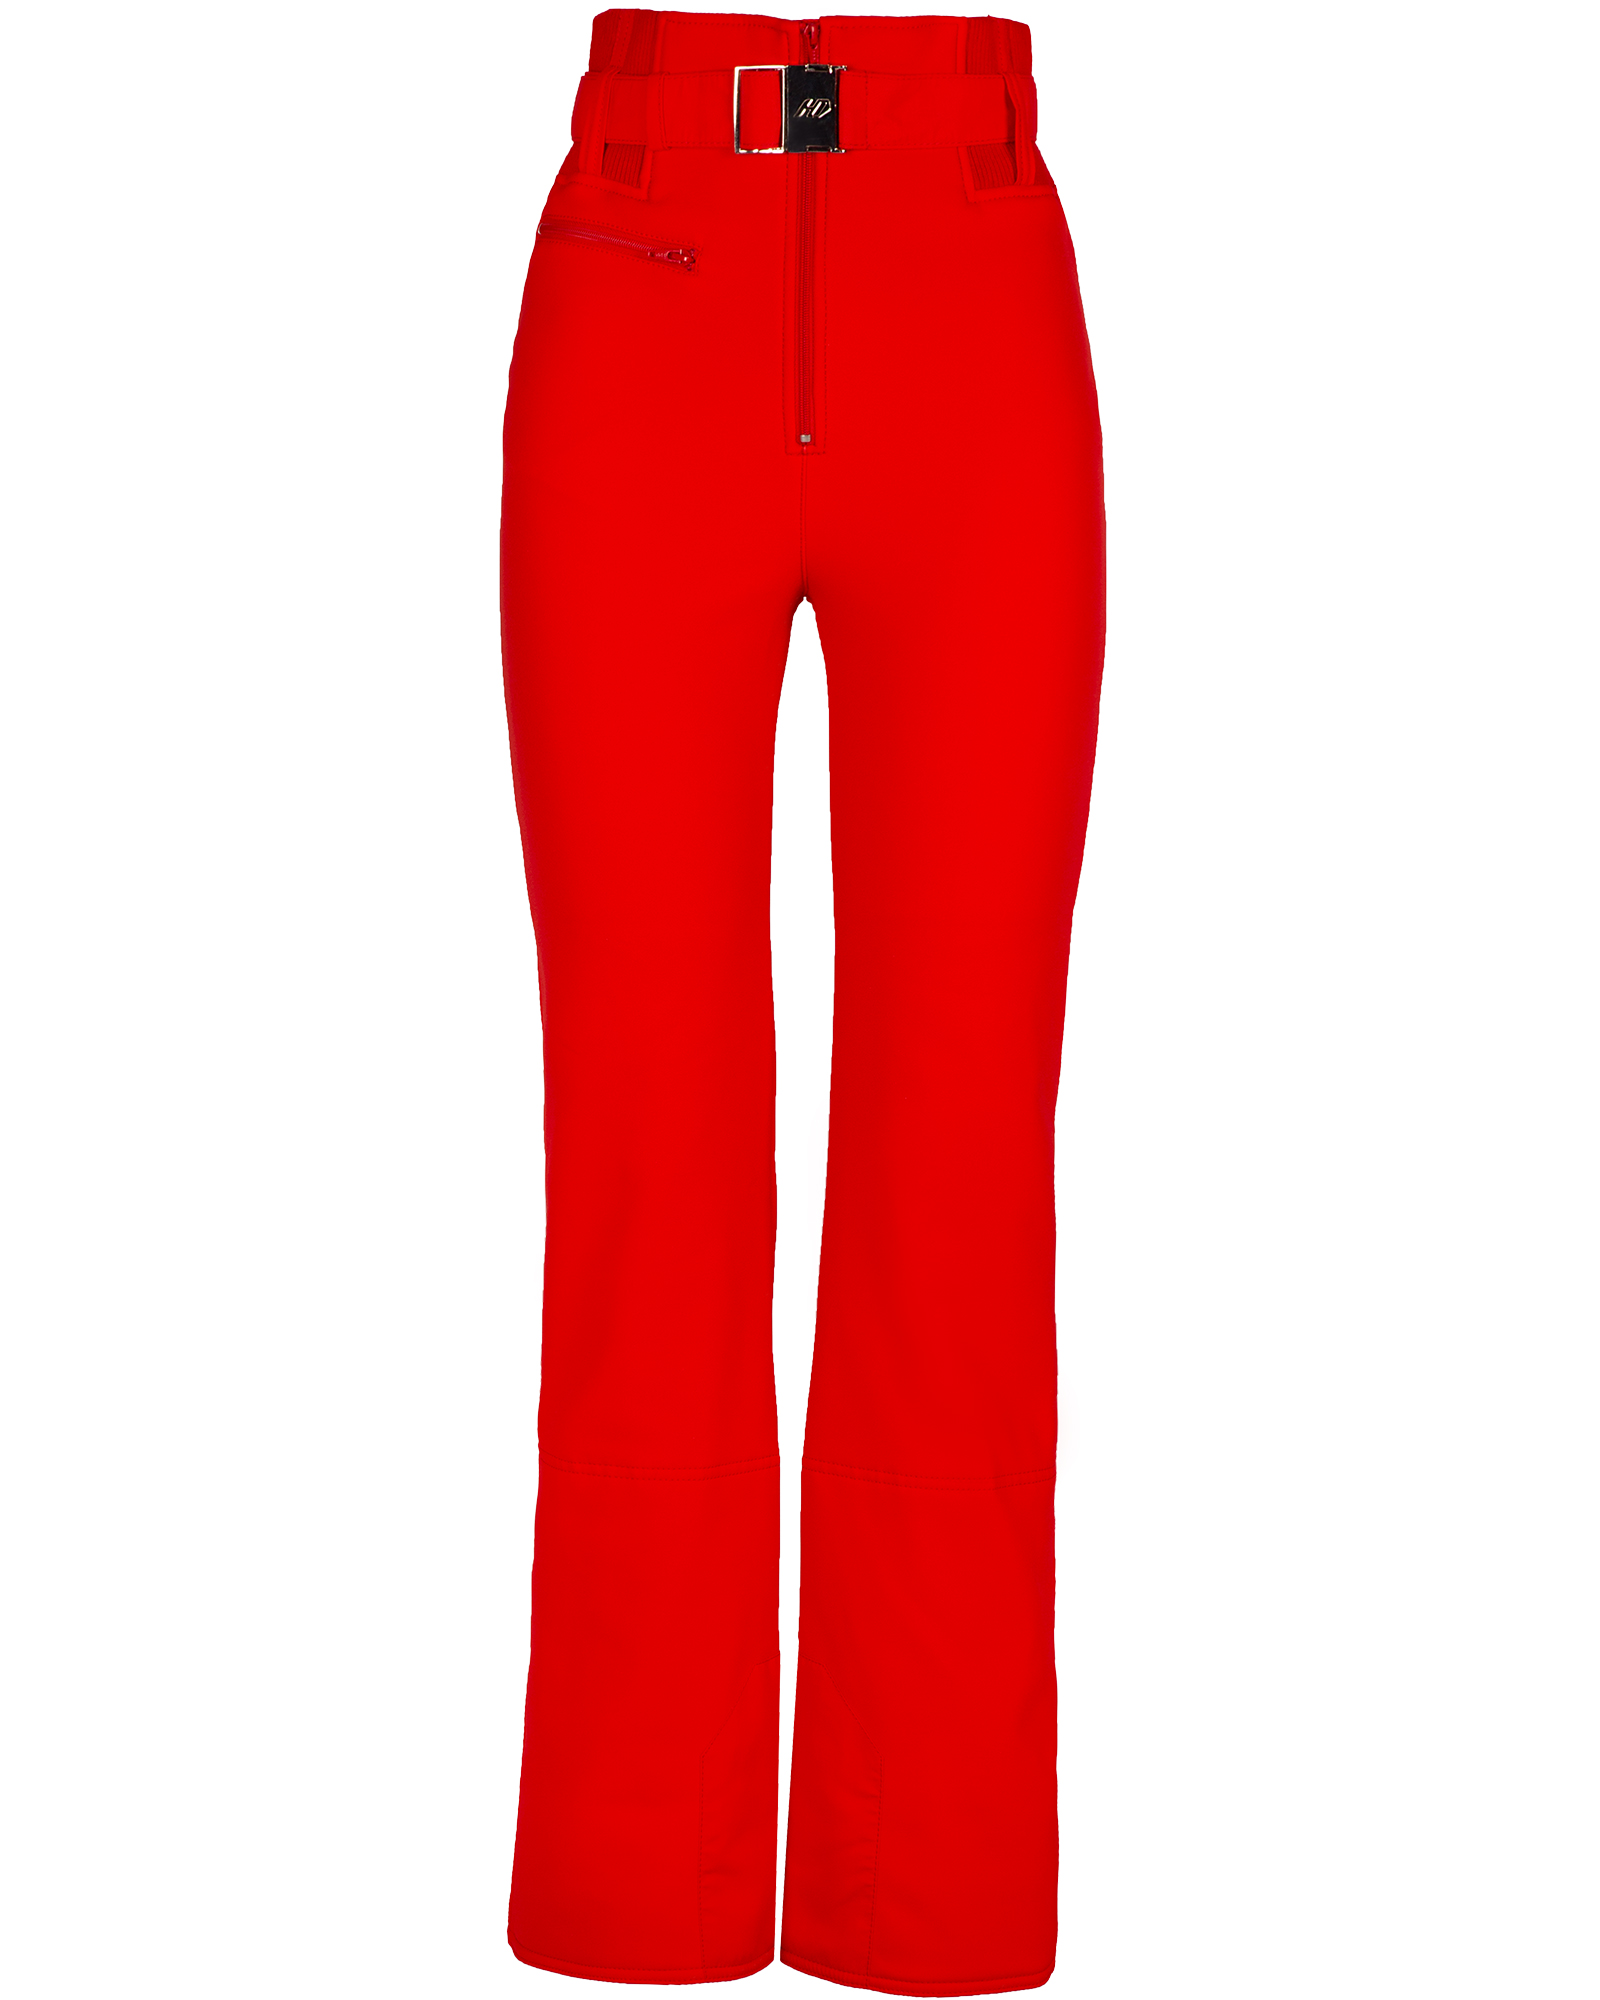 Duvillard Gridin Women’s Pants - Red 16